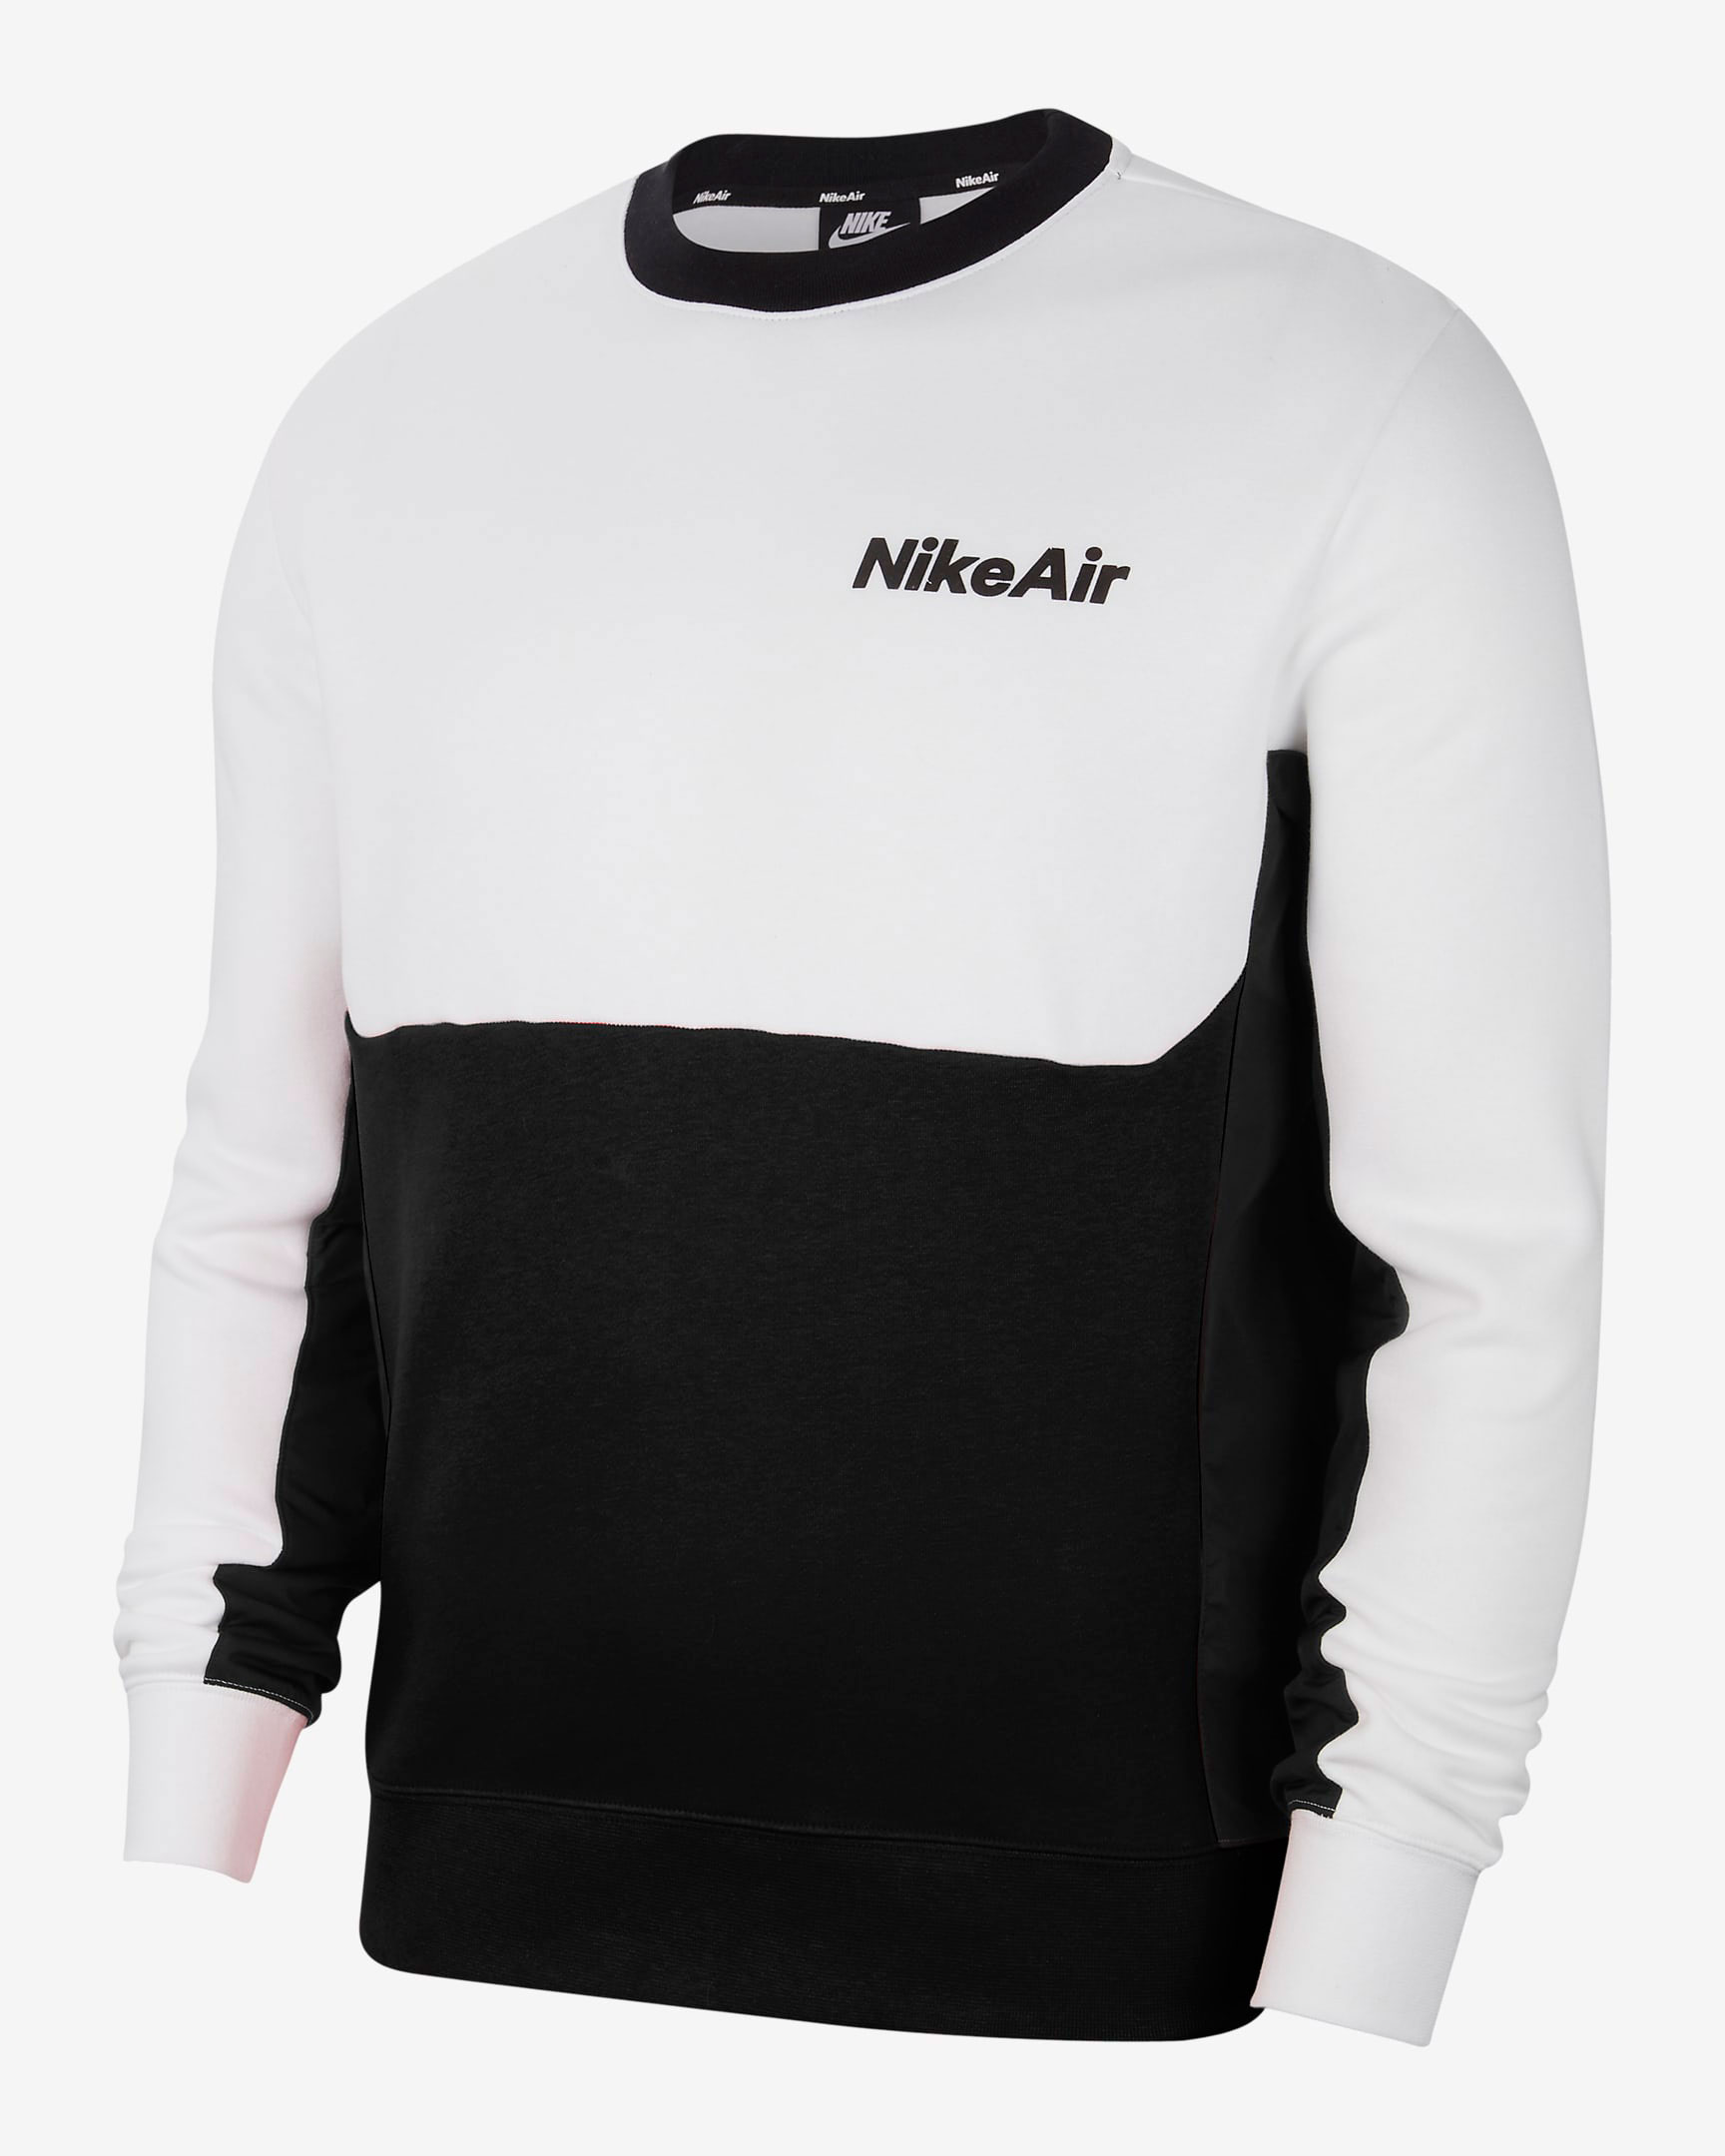 nike-air-fleece-crew-sweatshirt-white-black